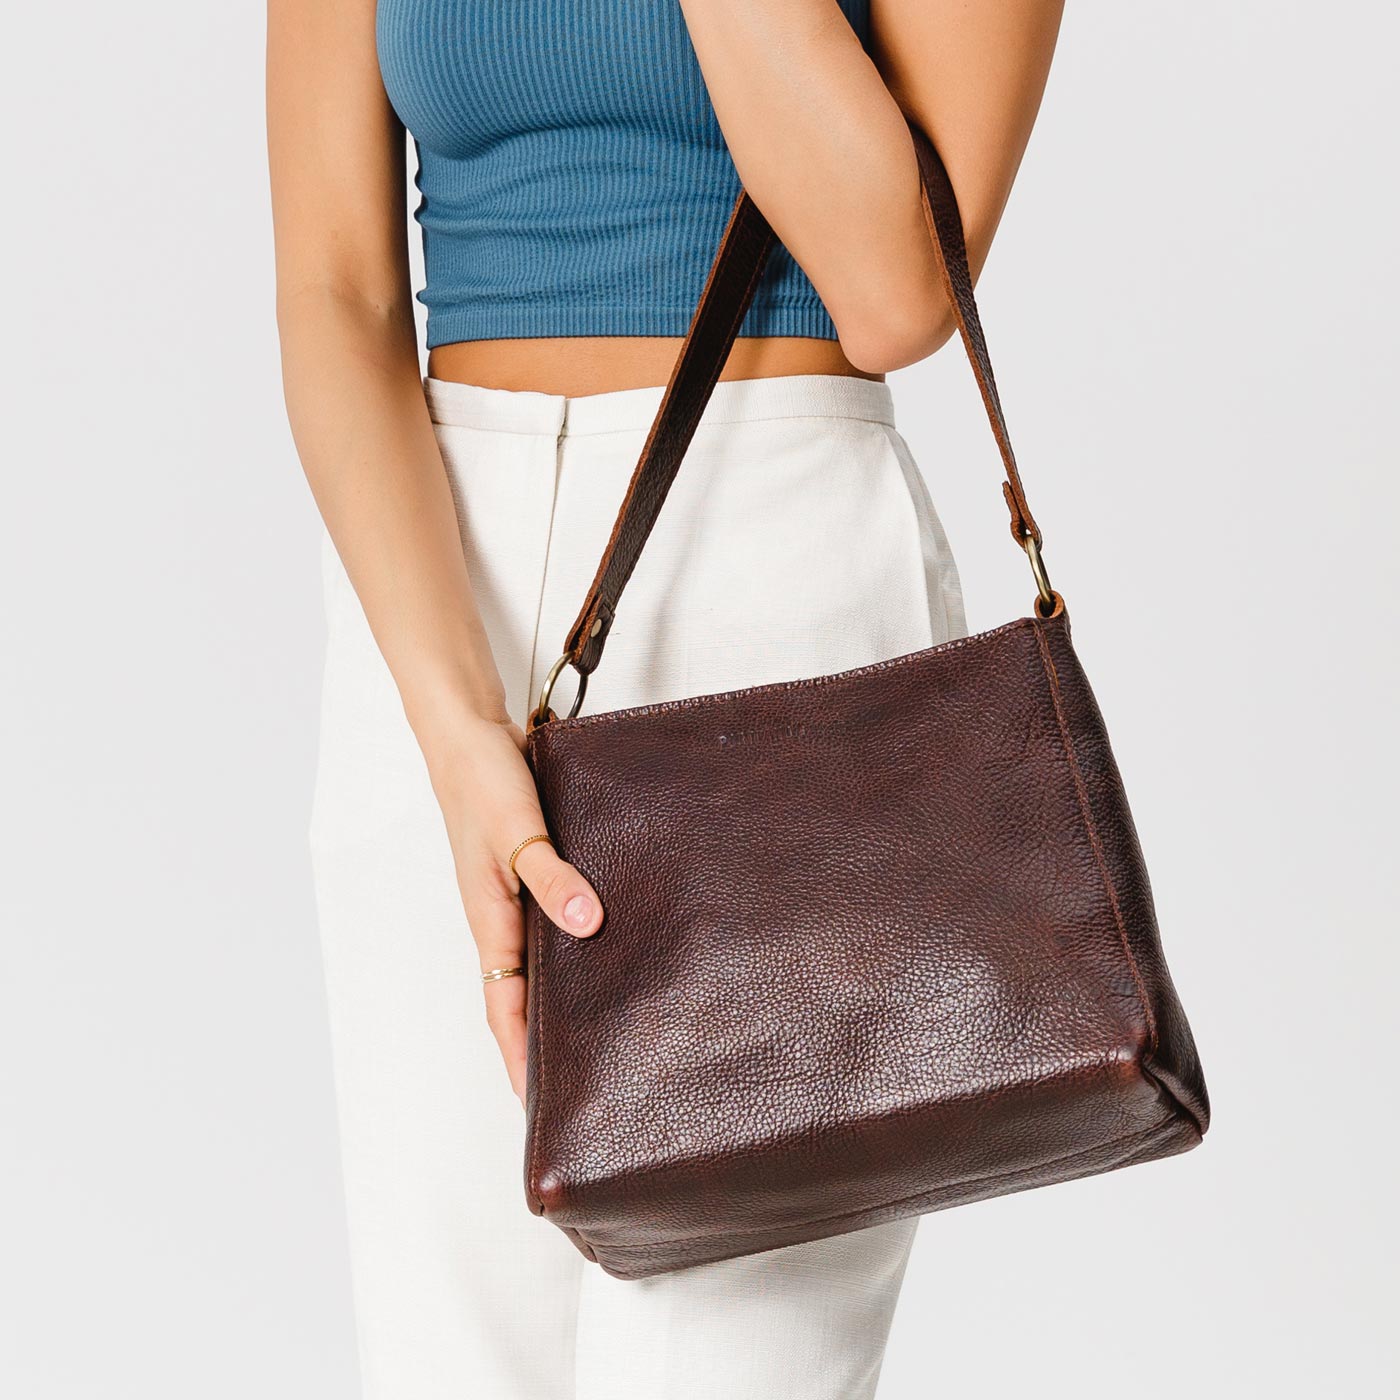 All Color: Coldbrew | Triangle Leather Handmade Bag